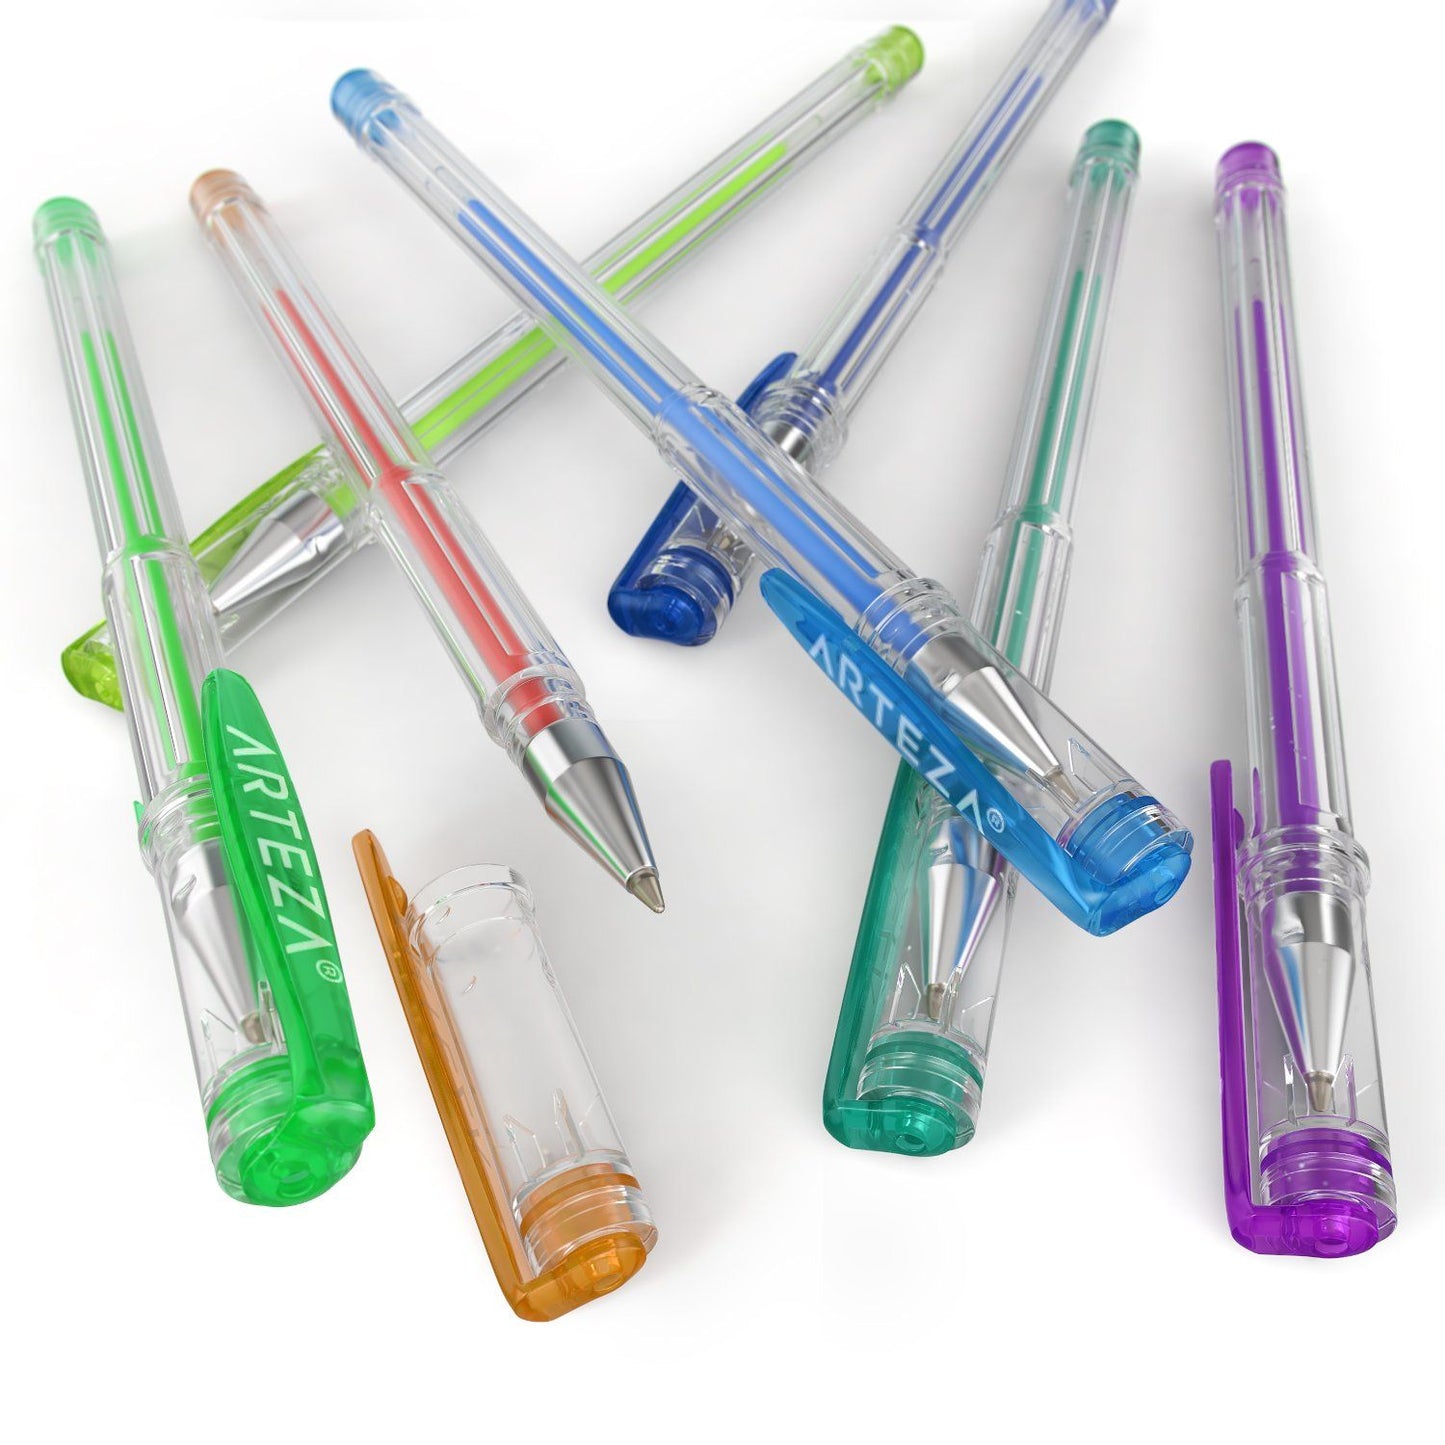 GLAZU 60 PCs Neon Color Ink Pens Set for Coloring